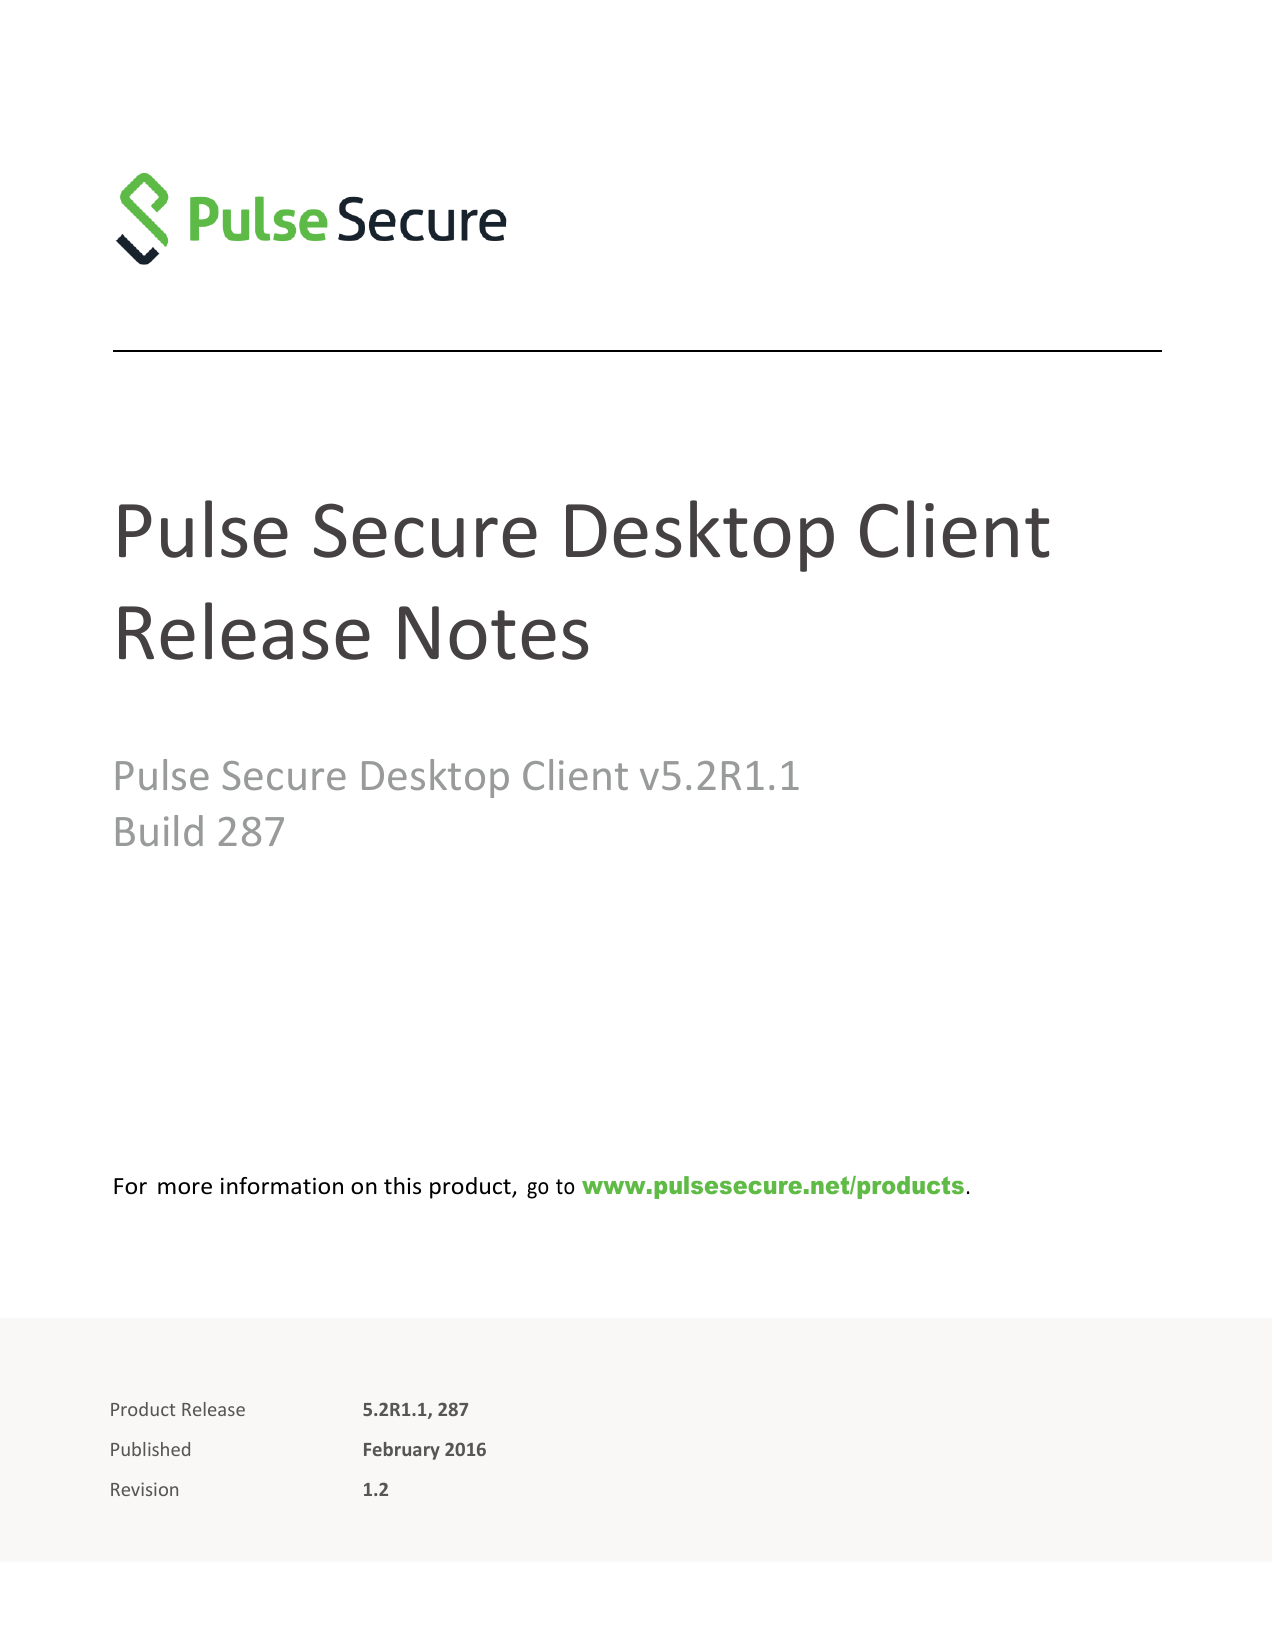 pulse secure client osx